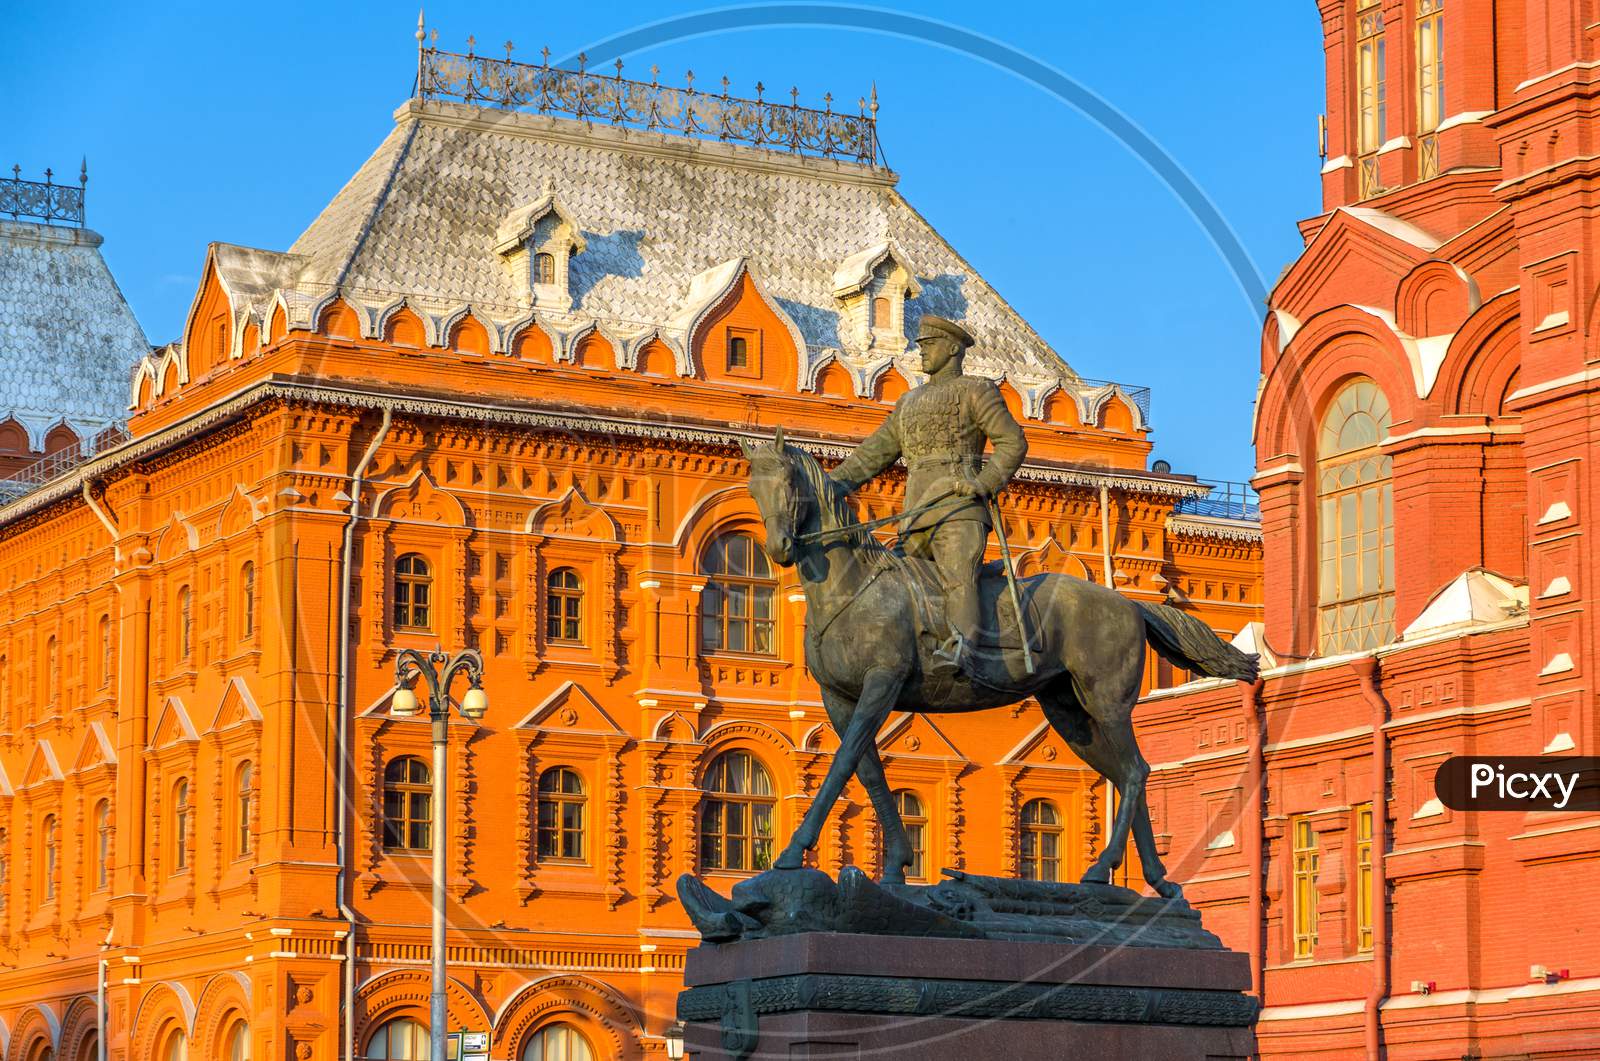 Zhukov Memorial Statue In Moscow, Russia